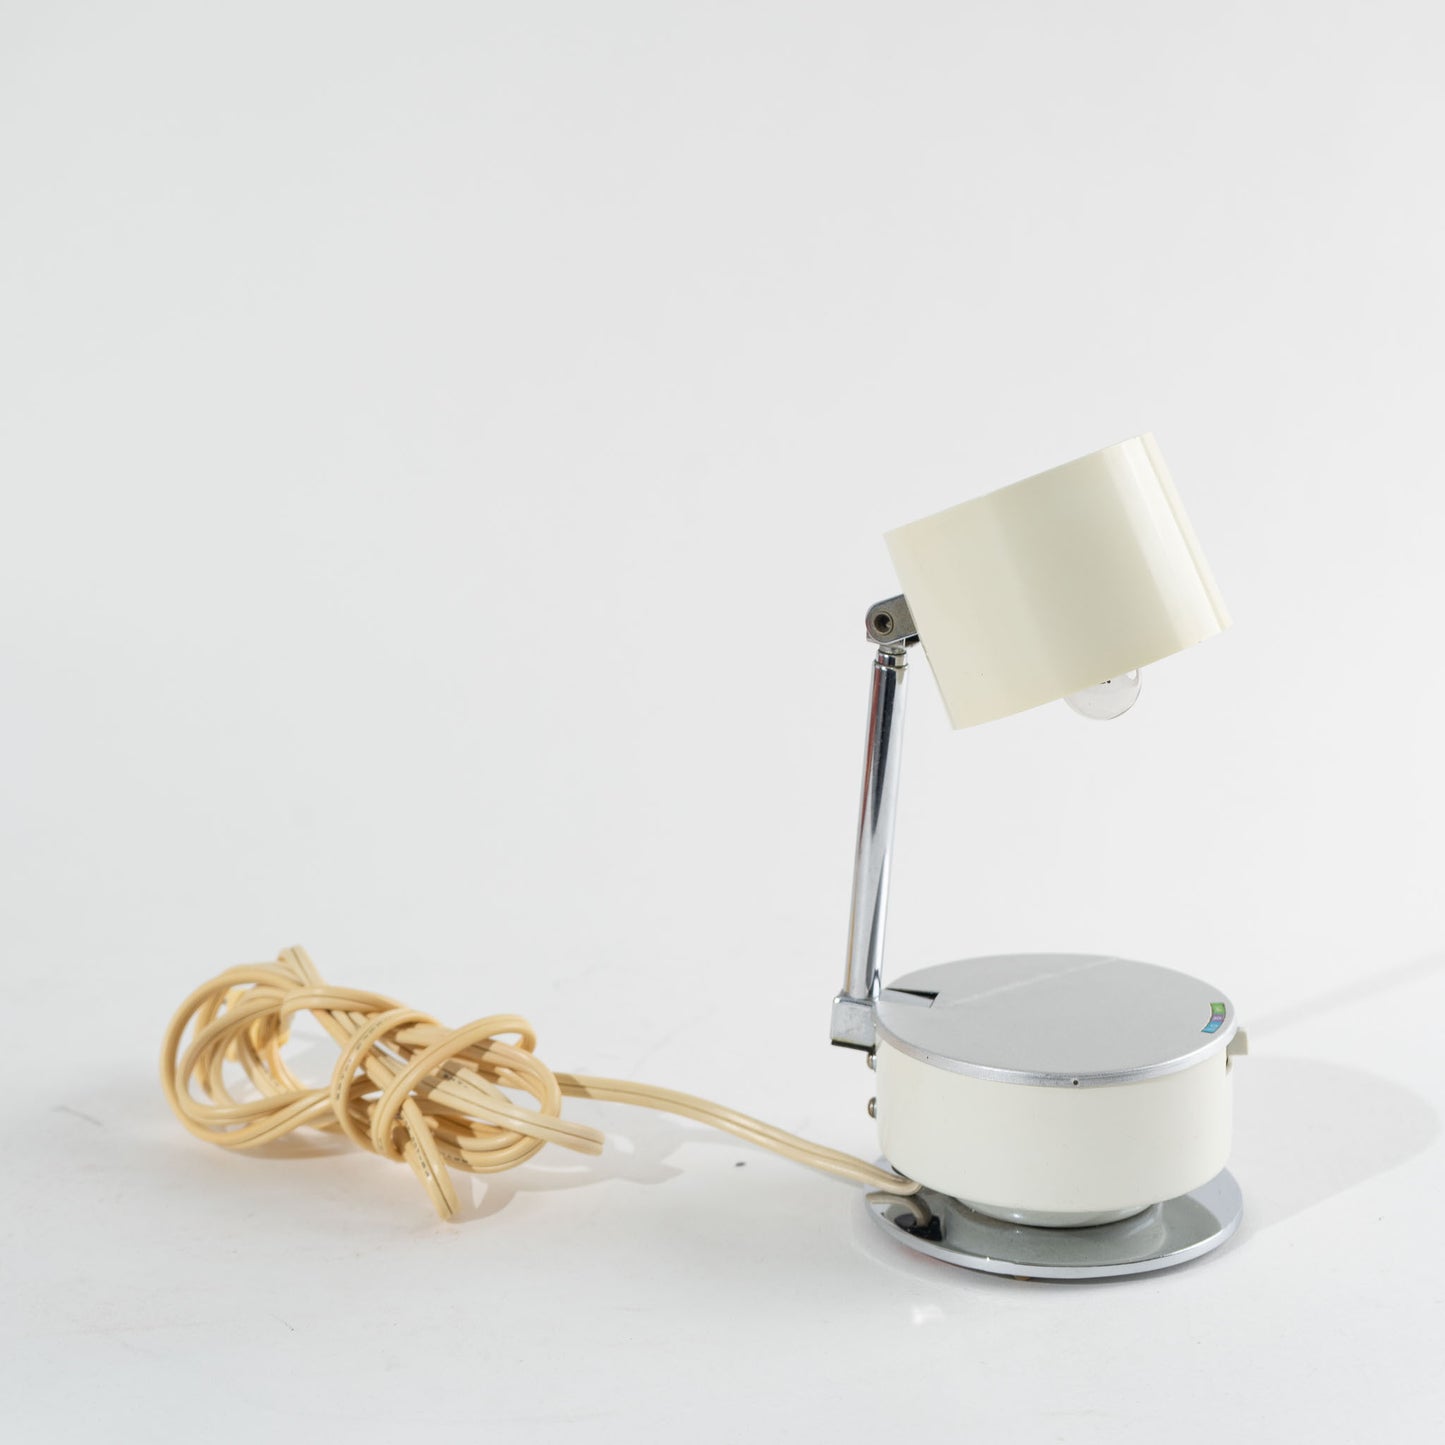 Vintage Japanese Telescoping Desk Lamp - Lightolier Style - Adjustable 